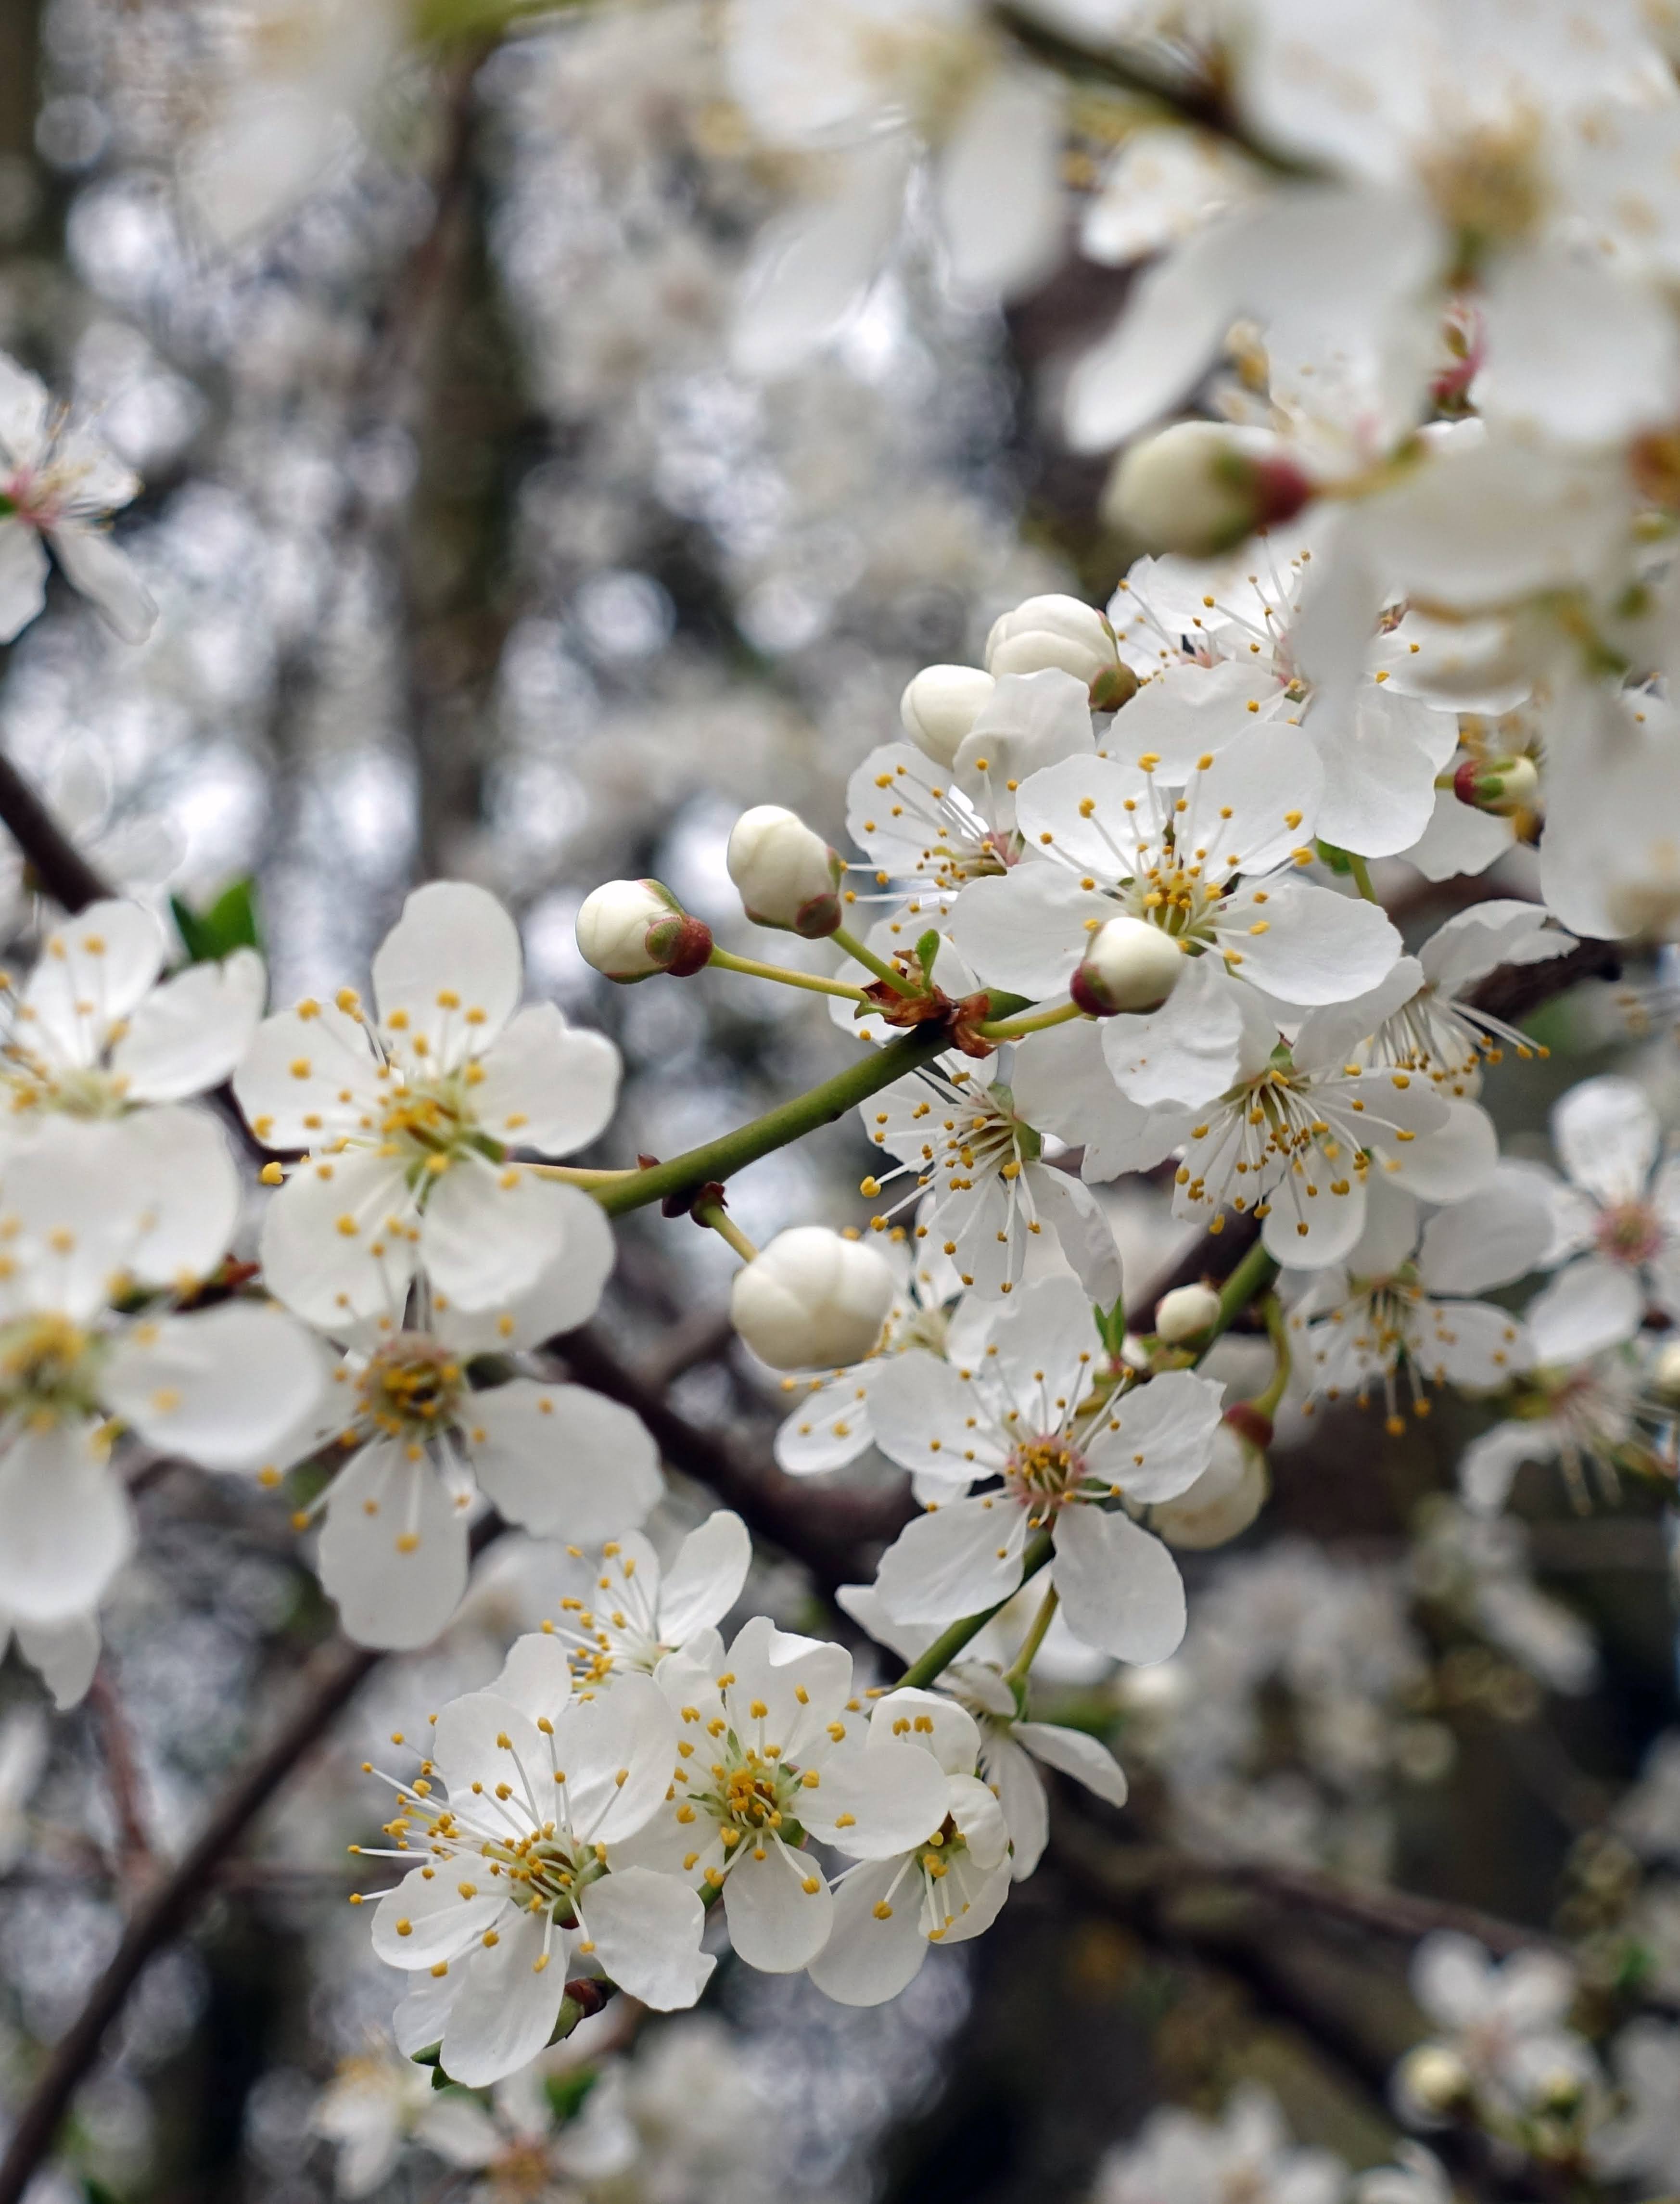 White Cherry Blossom in Close-Up | Photo by Jacqueline O'Gara via Unsplash